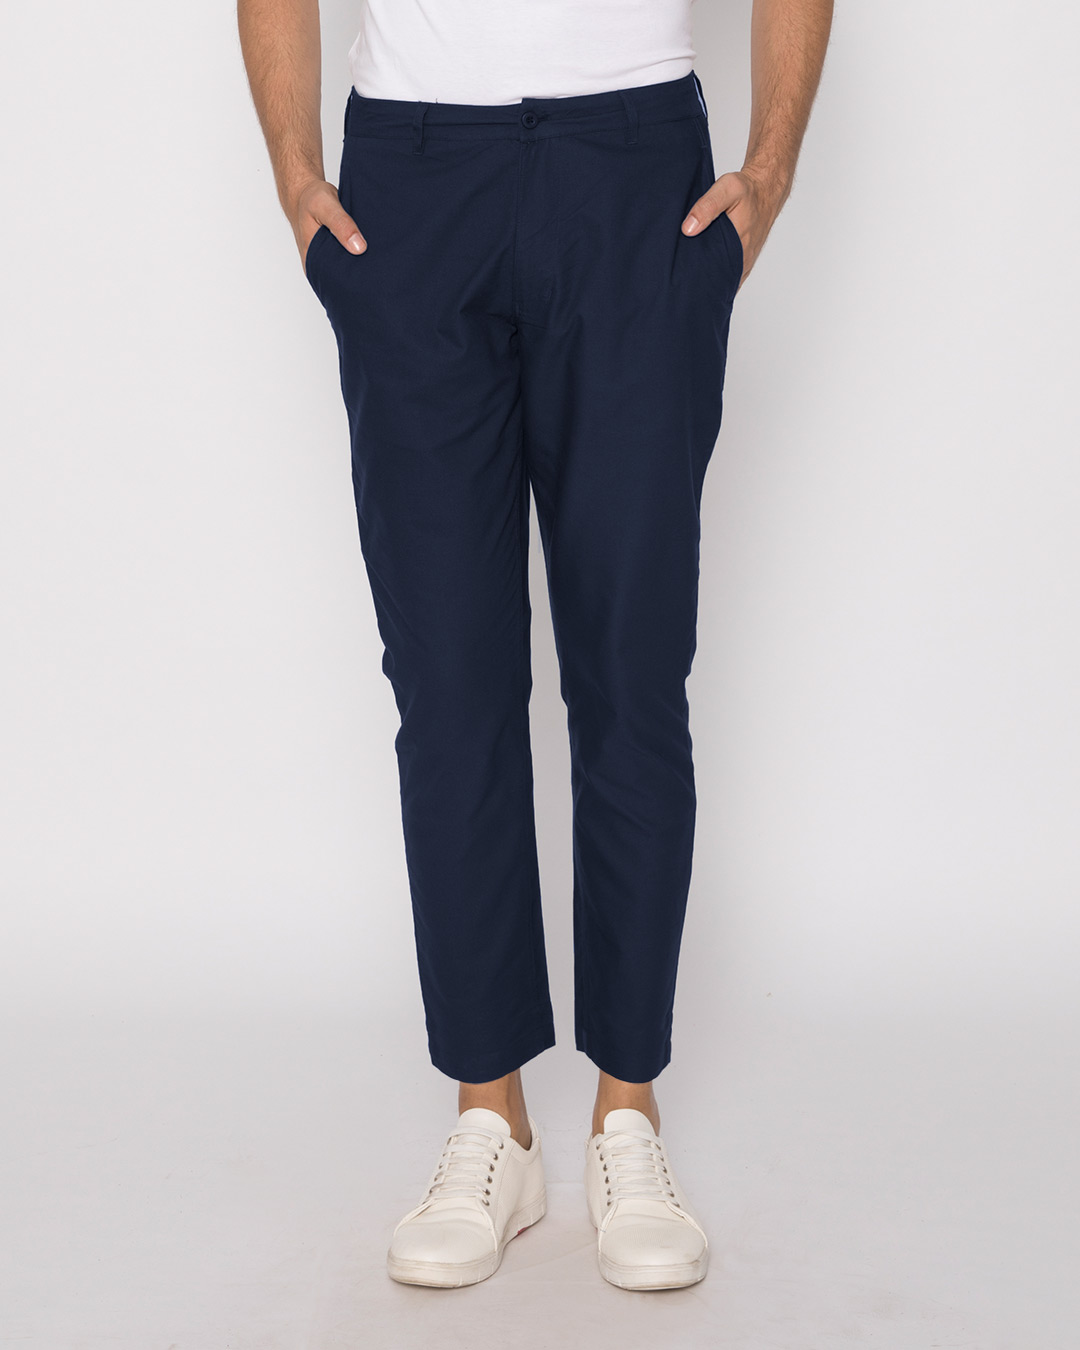 Buy Navy Blue Lightweight Slim Oxford Pants Online at Bewakoof